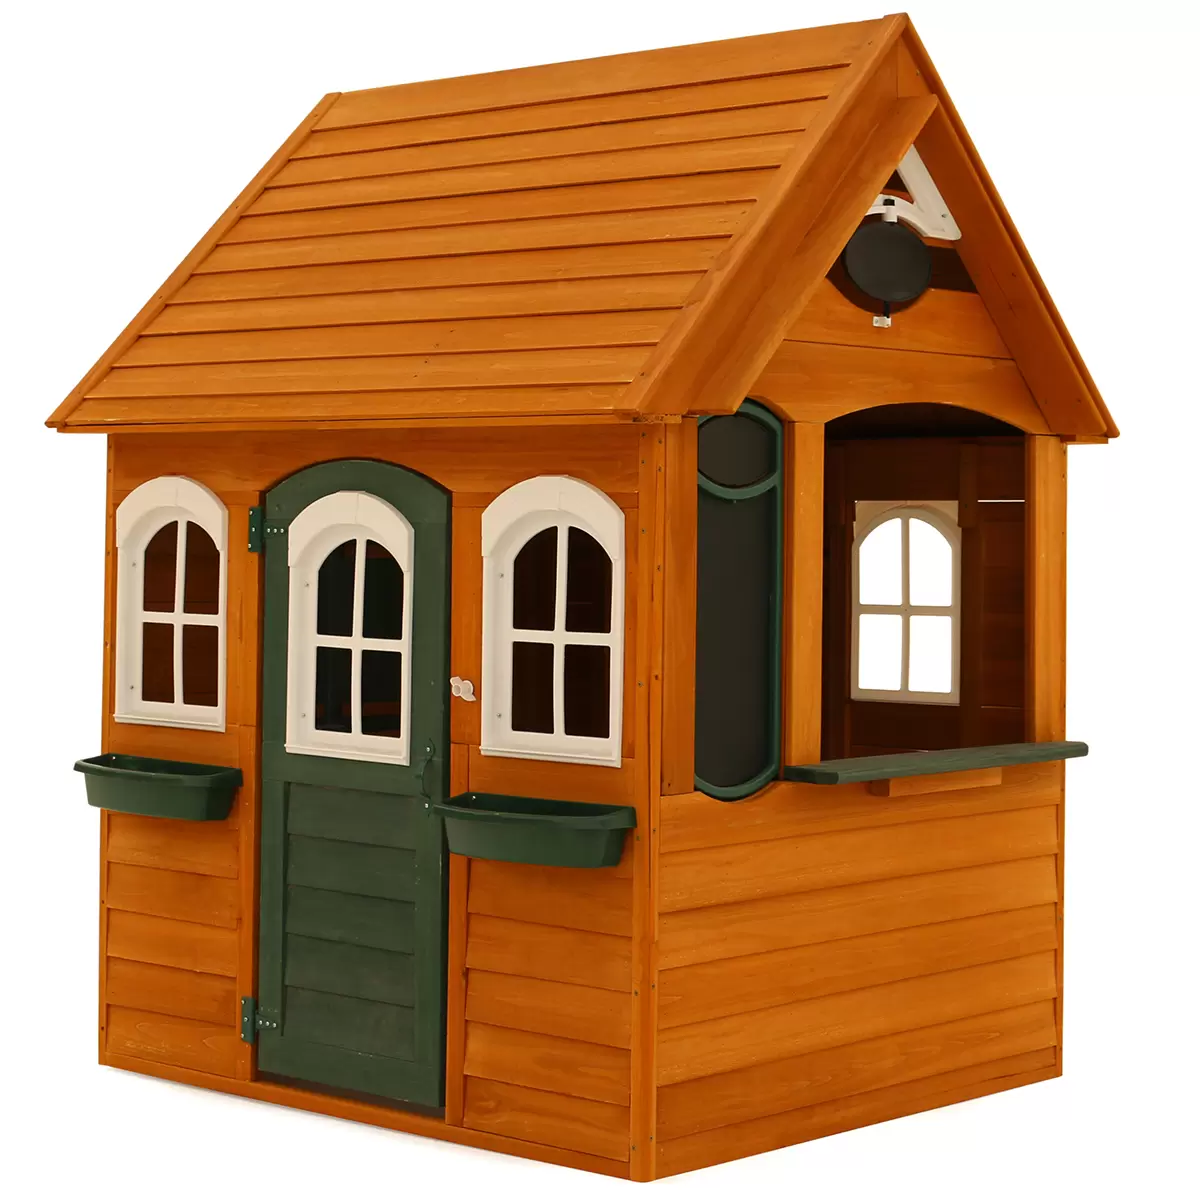 KidKraft Bancroft Wooden Play House